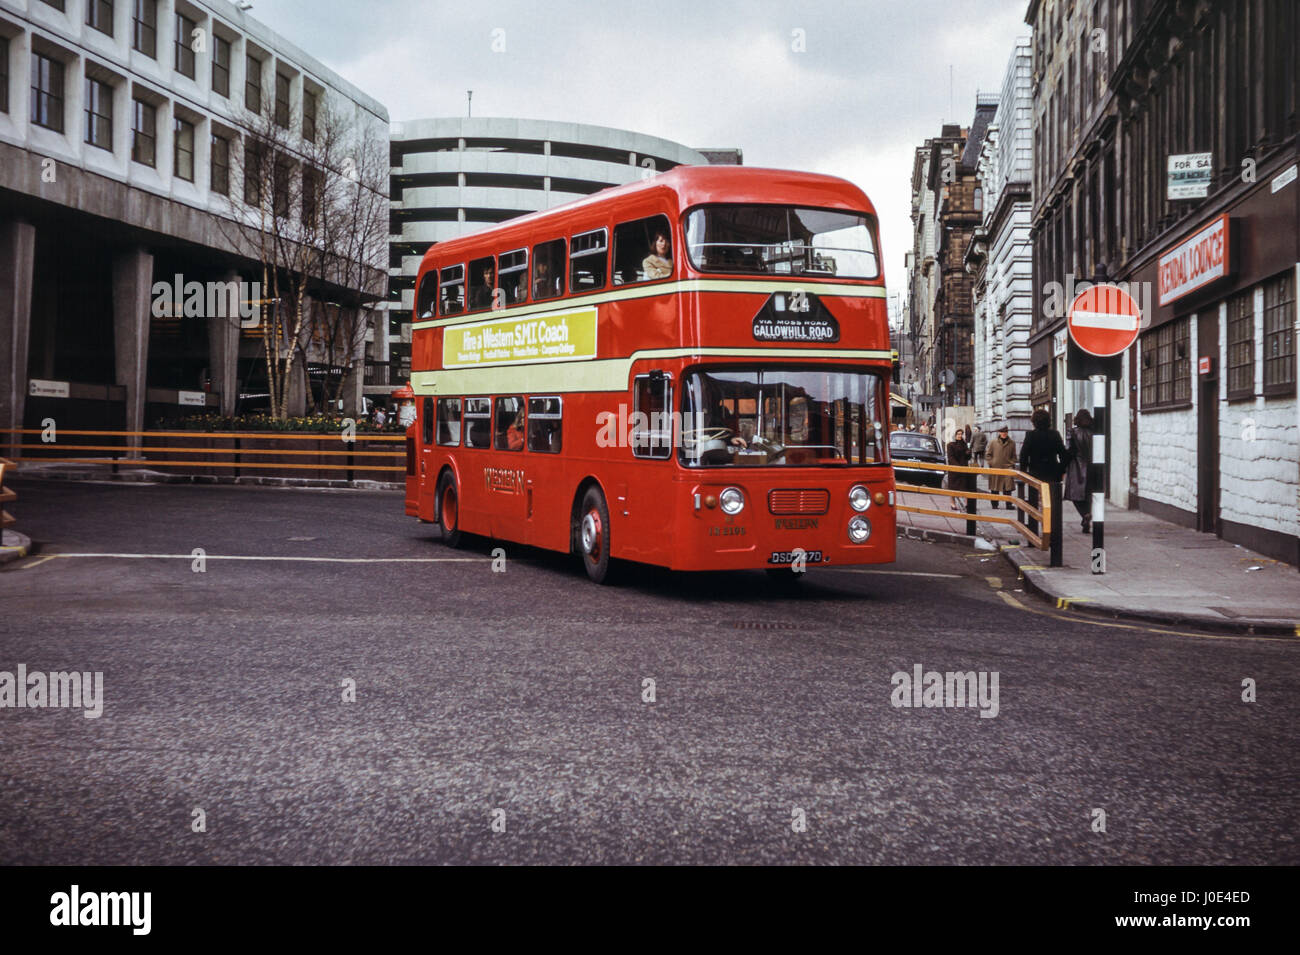 Escocia, Reino Unido - 1973: Vintage imagen de autobús en el centro de Glasgow. SMT occidental DRCRG6LX/AR22D 2106 (número de registro DSD 747D). Foto de stock